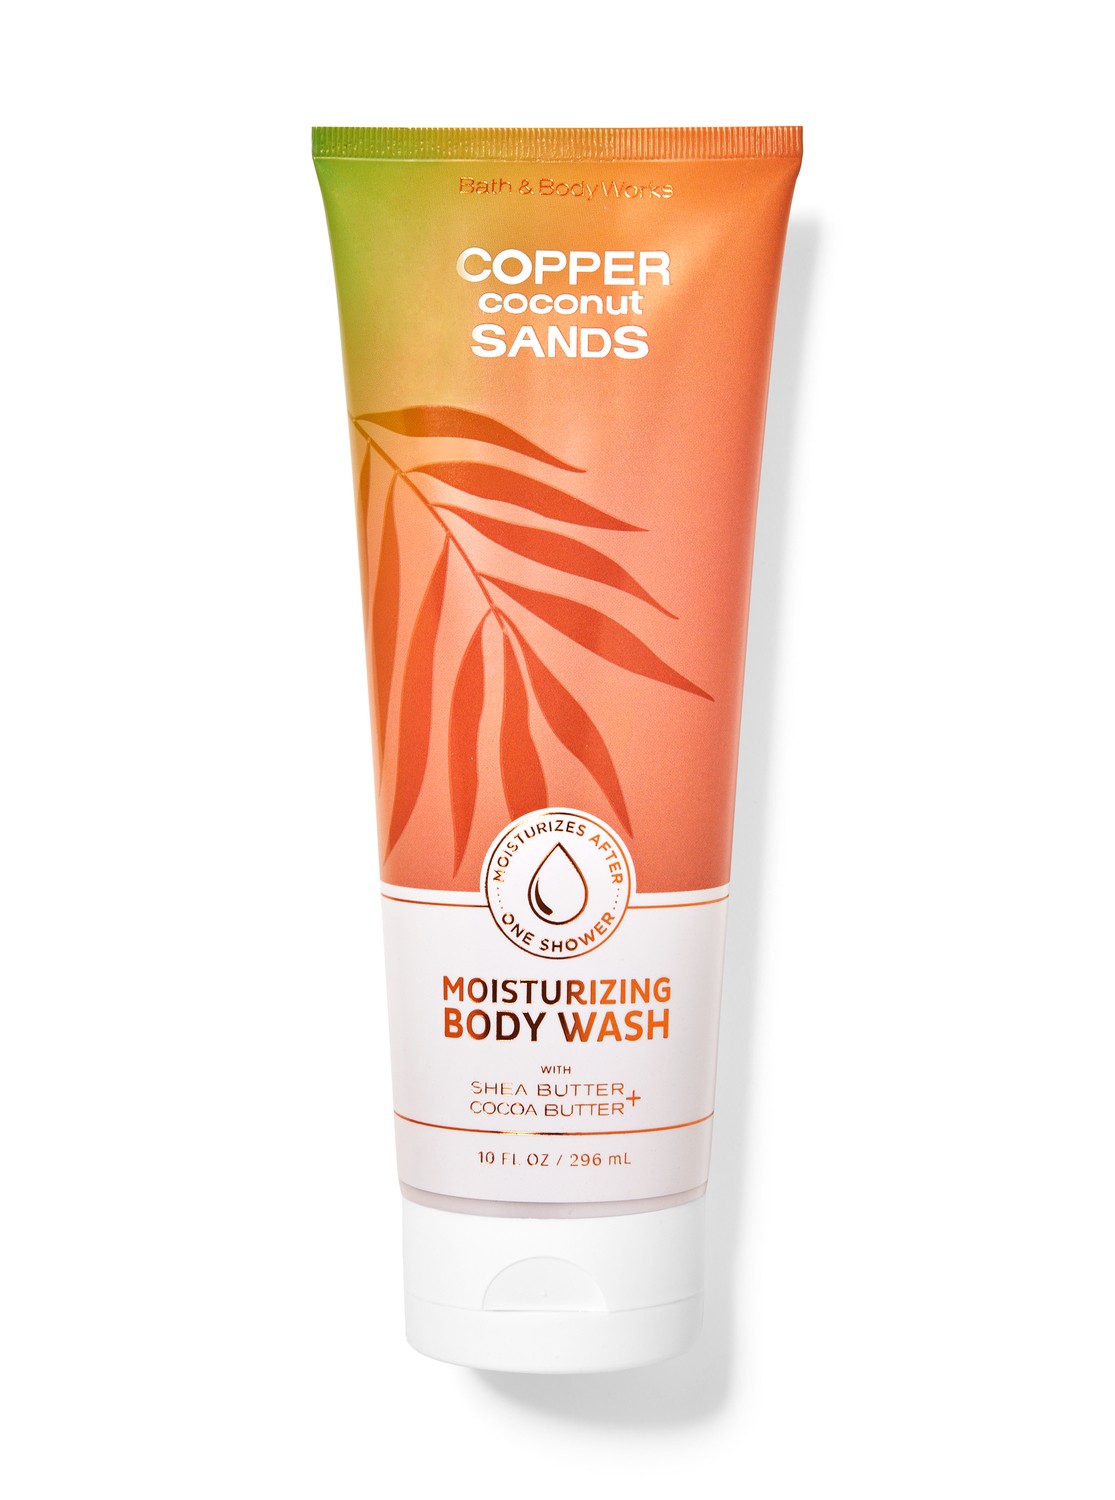 Buy Copper Coconut Sands Online | Bath & Body Works Australia Official Site